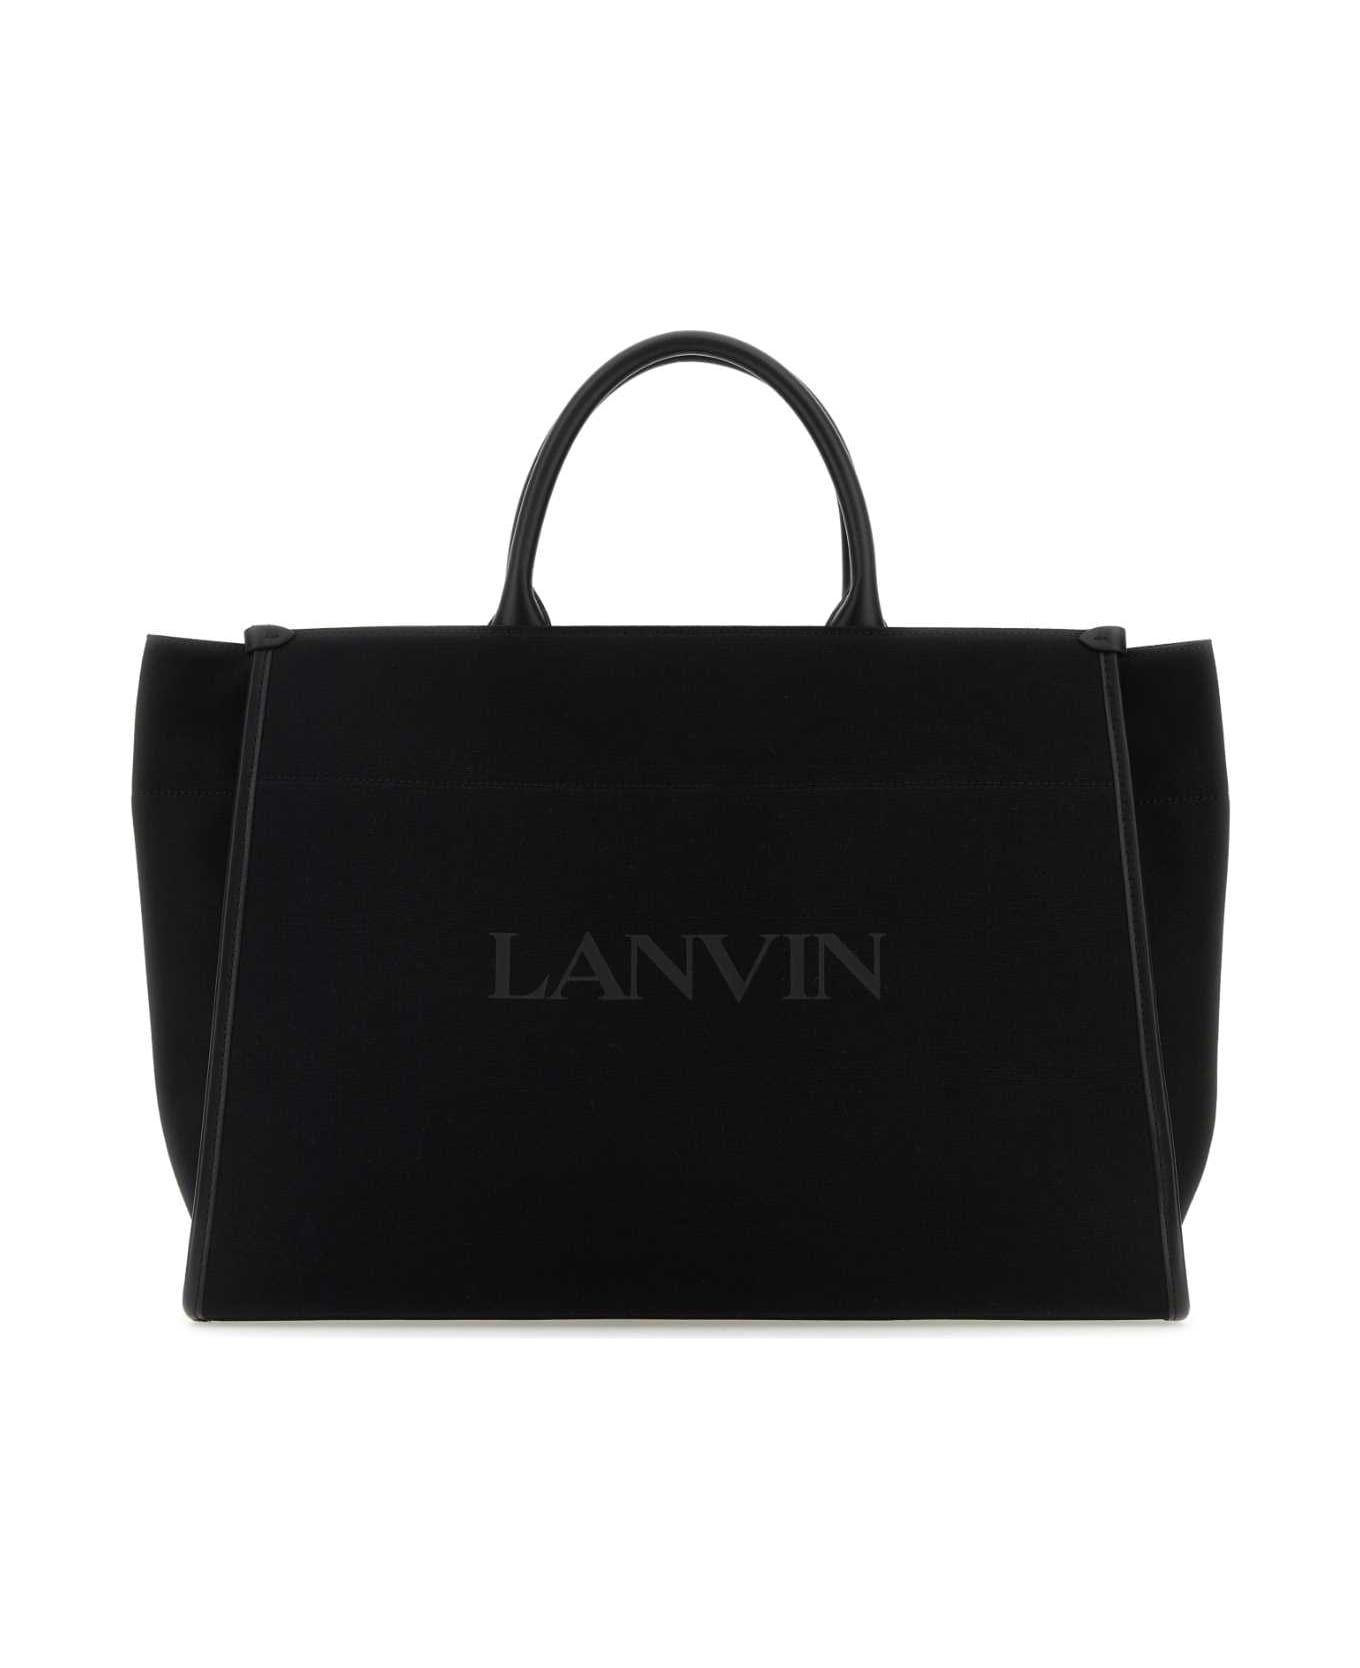 Lanvin Black Canvas Mm Shopping Bag - Black